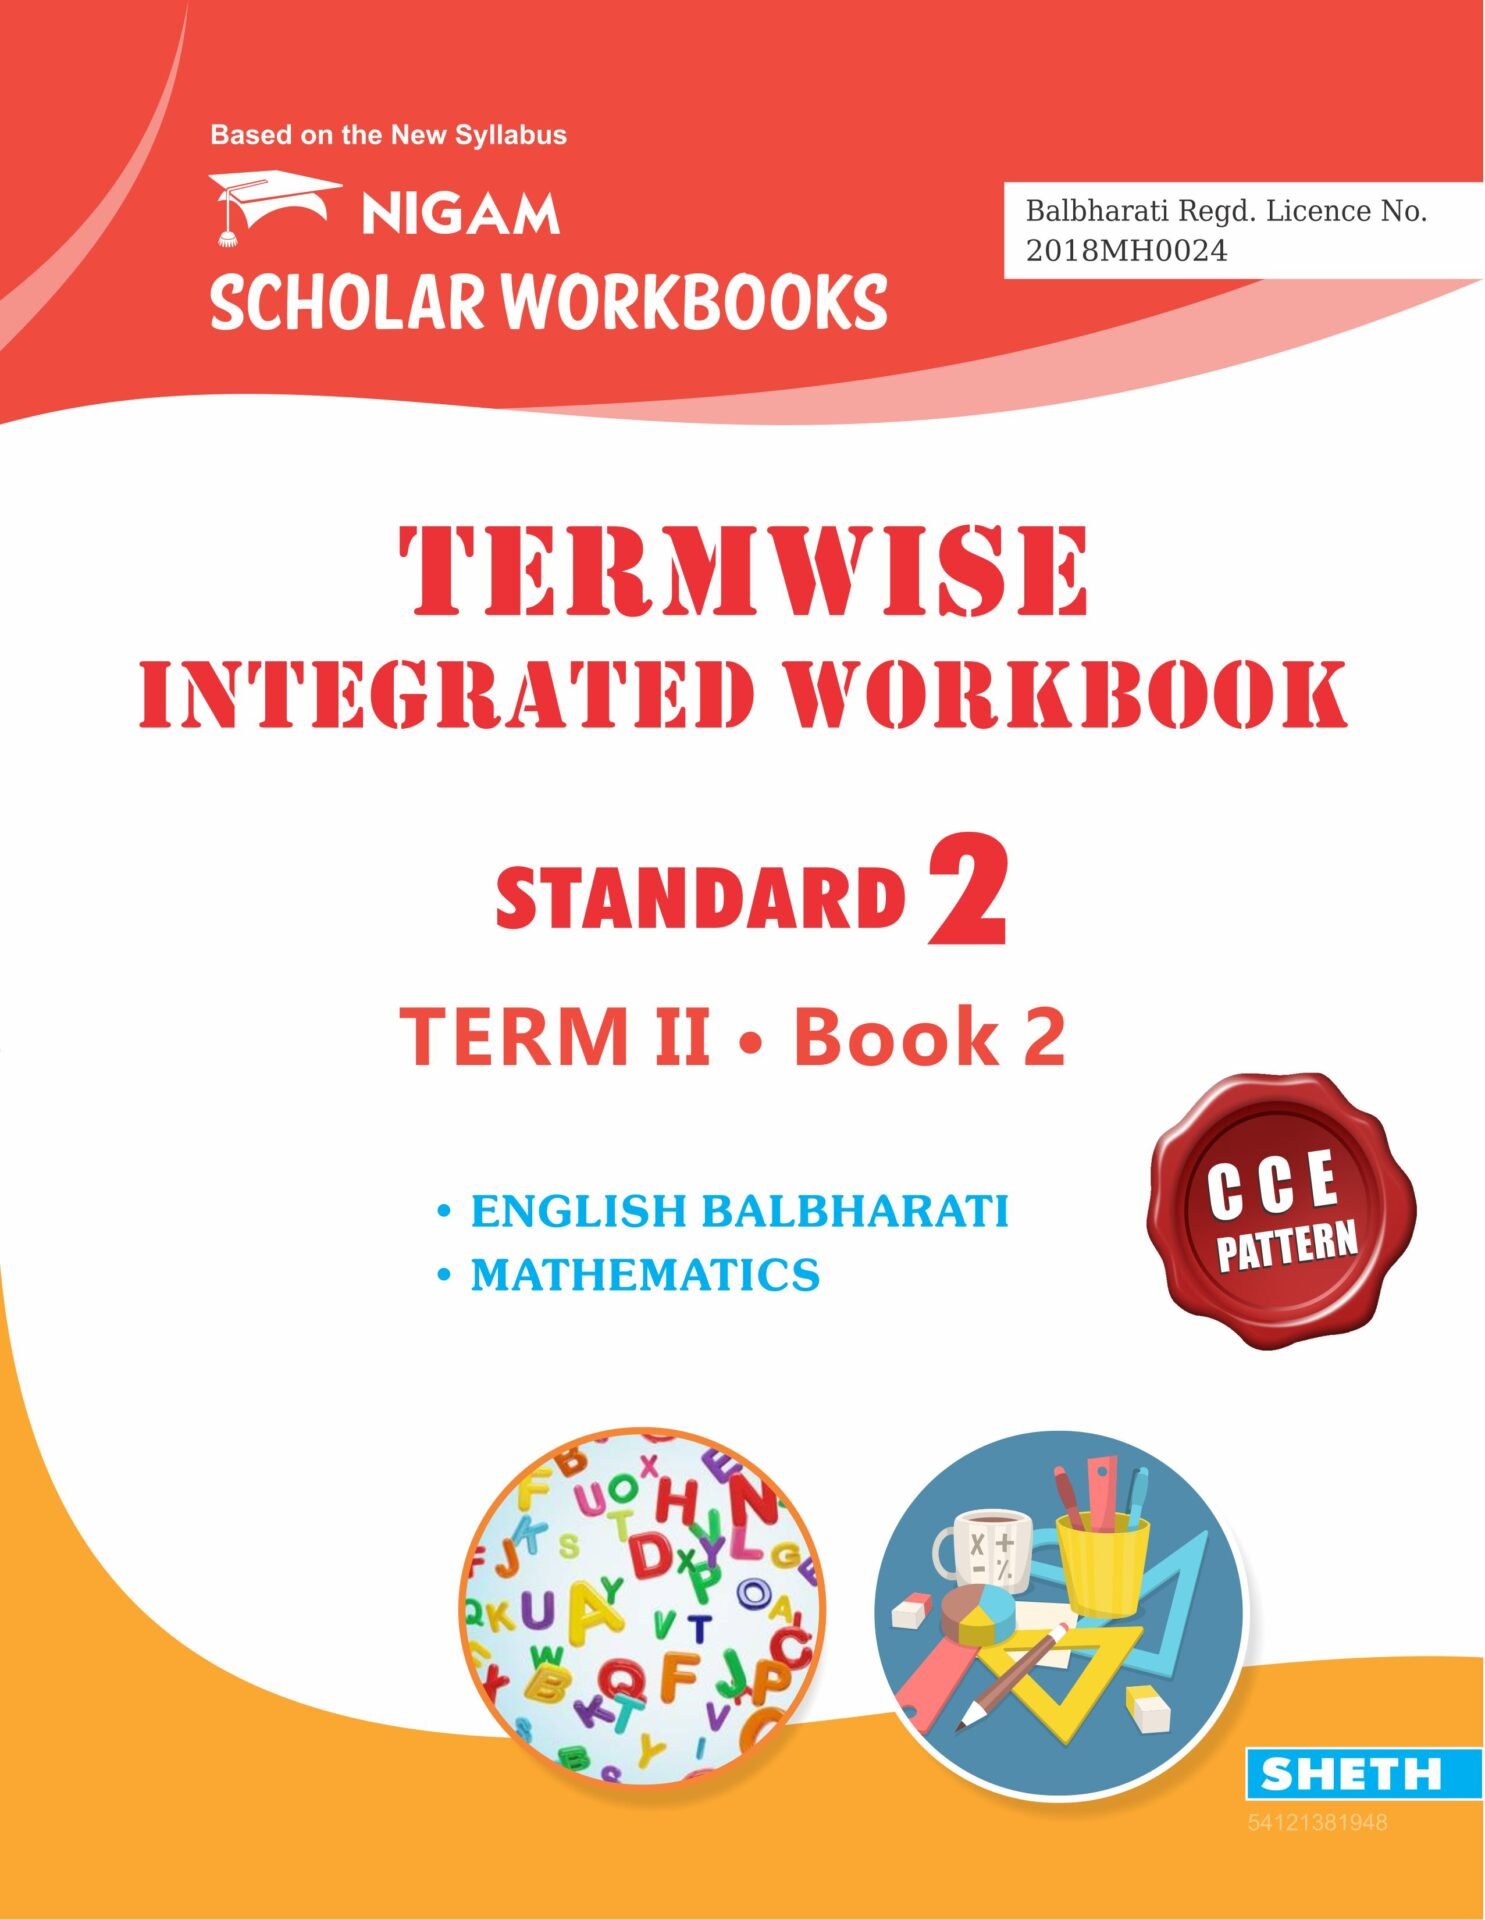 CCE Pattern Nigam Scholar Workbooks Termwise Integrated Workbook English Balbharati and Mathematics Standard 2 Term 2 Book 2 1